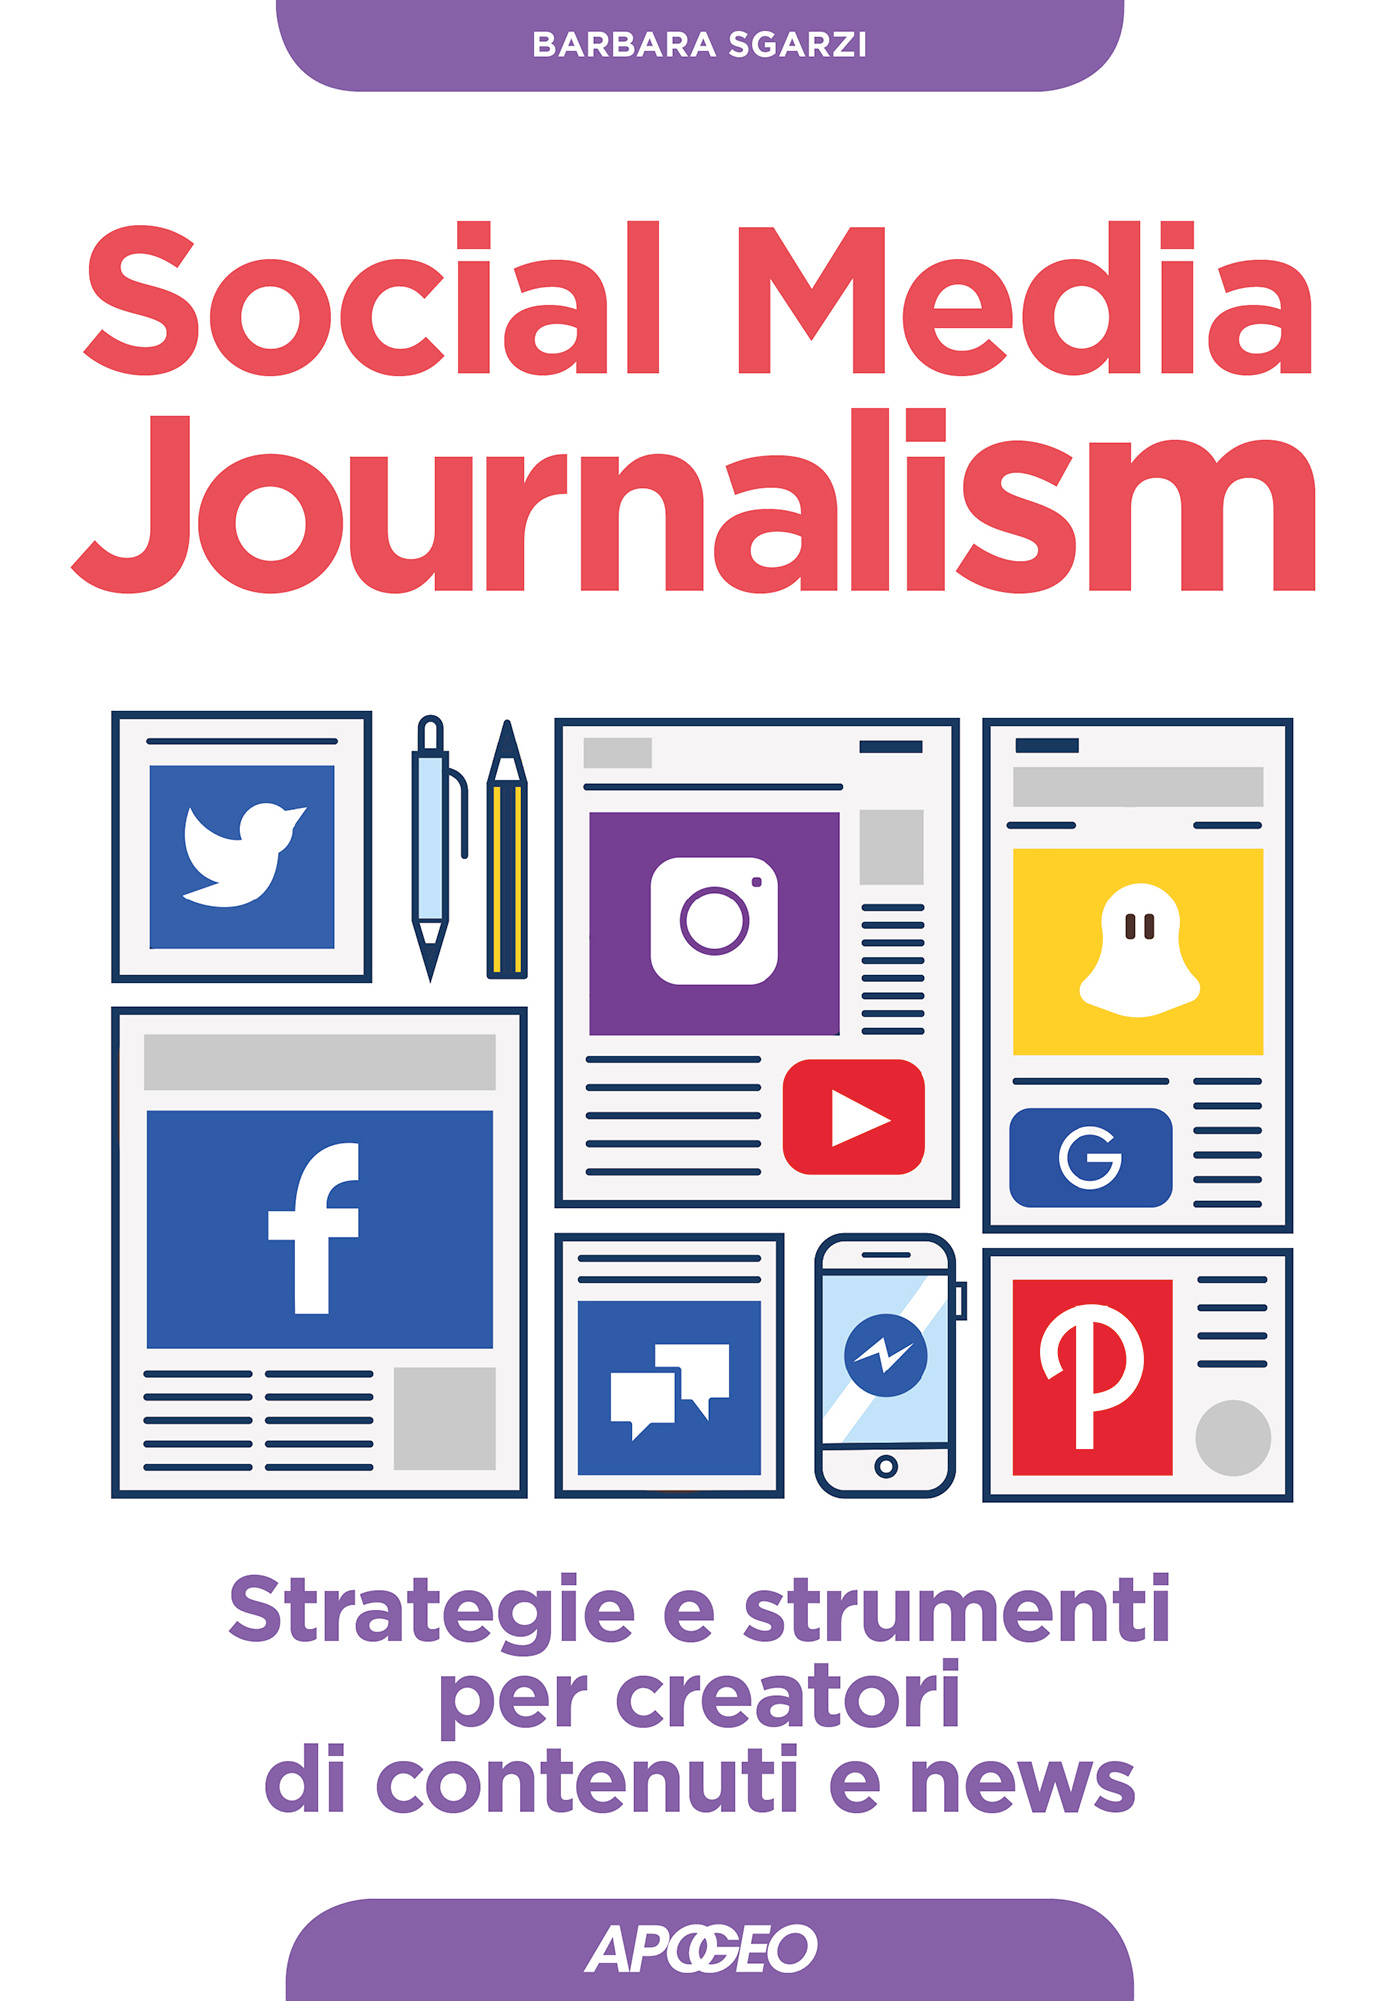 Social Media Journalism